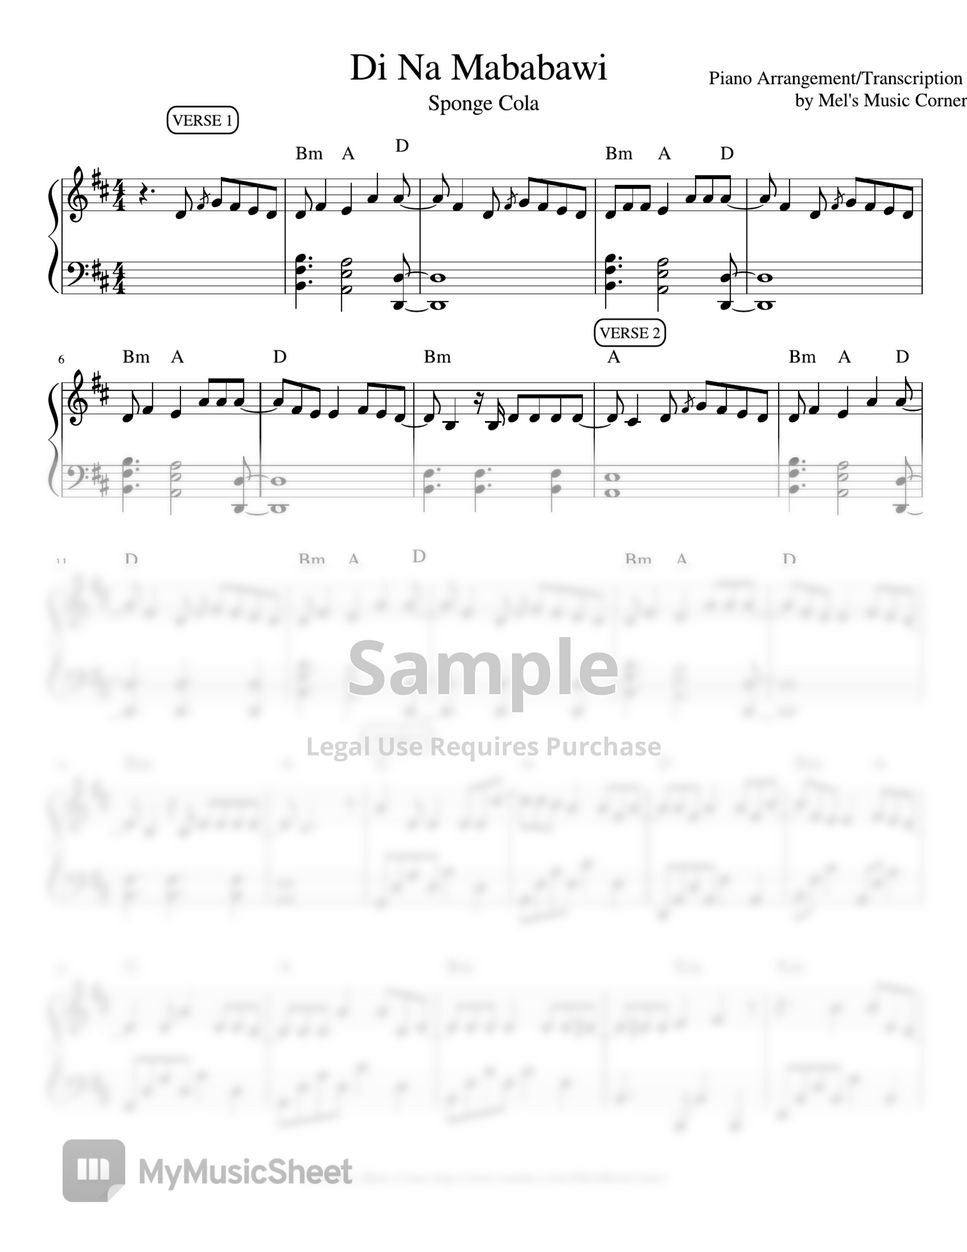 Sponge Cola - Di Na Mababawi (piano sheet music) by Mel's Music Corner